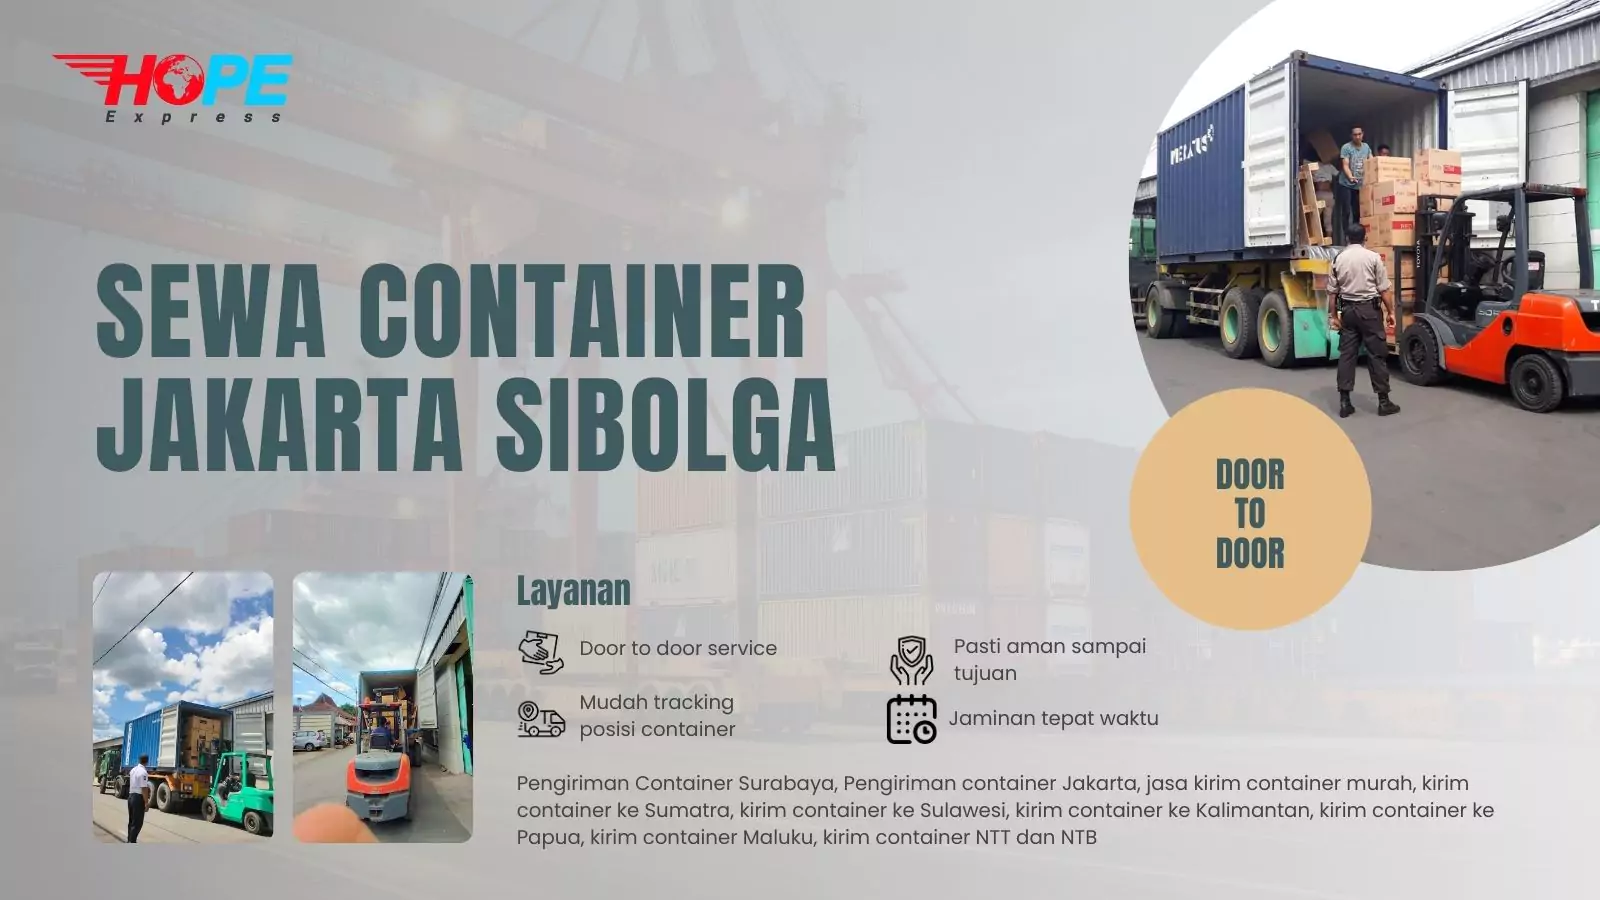 Sewa Container Jakarta Sibolga